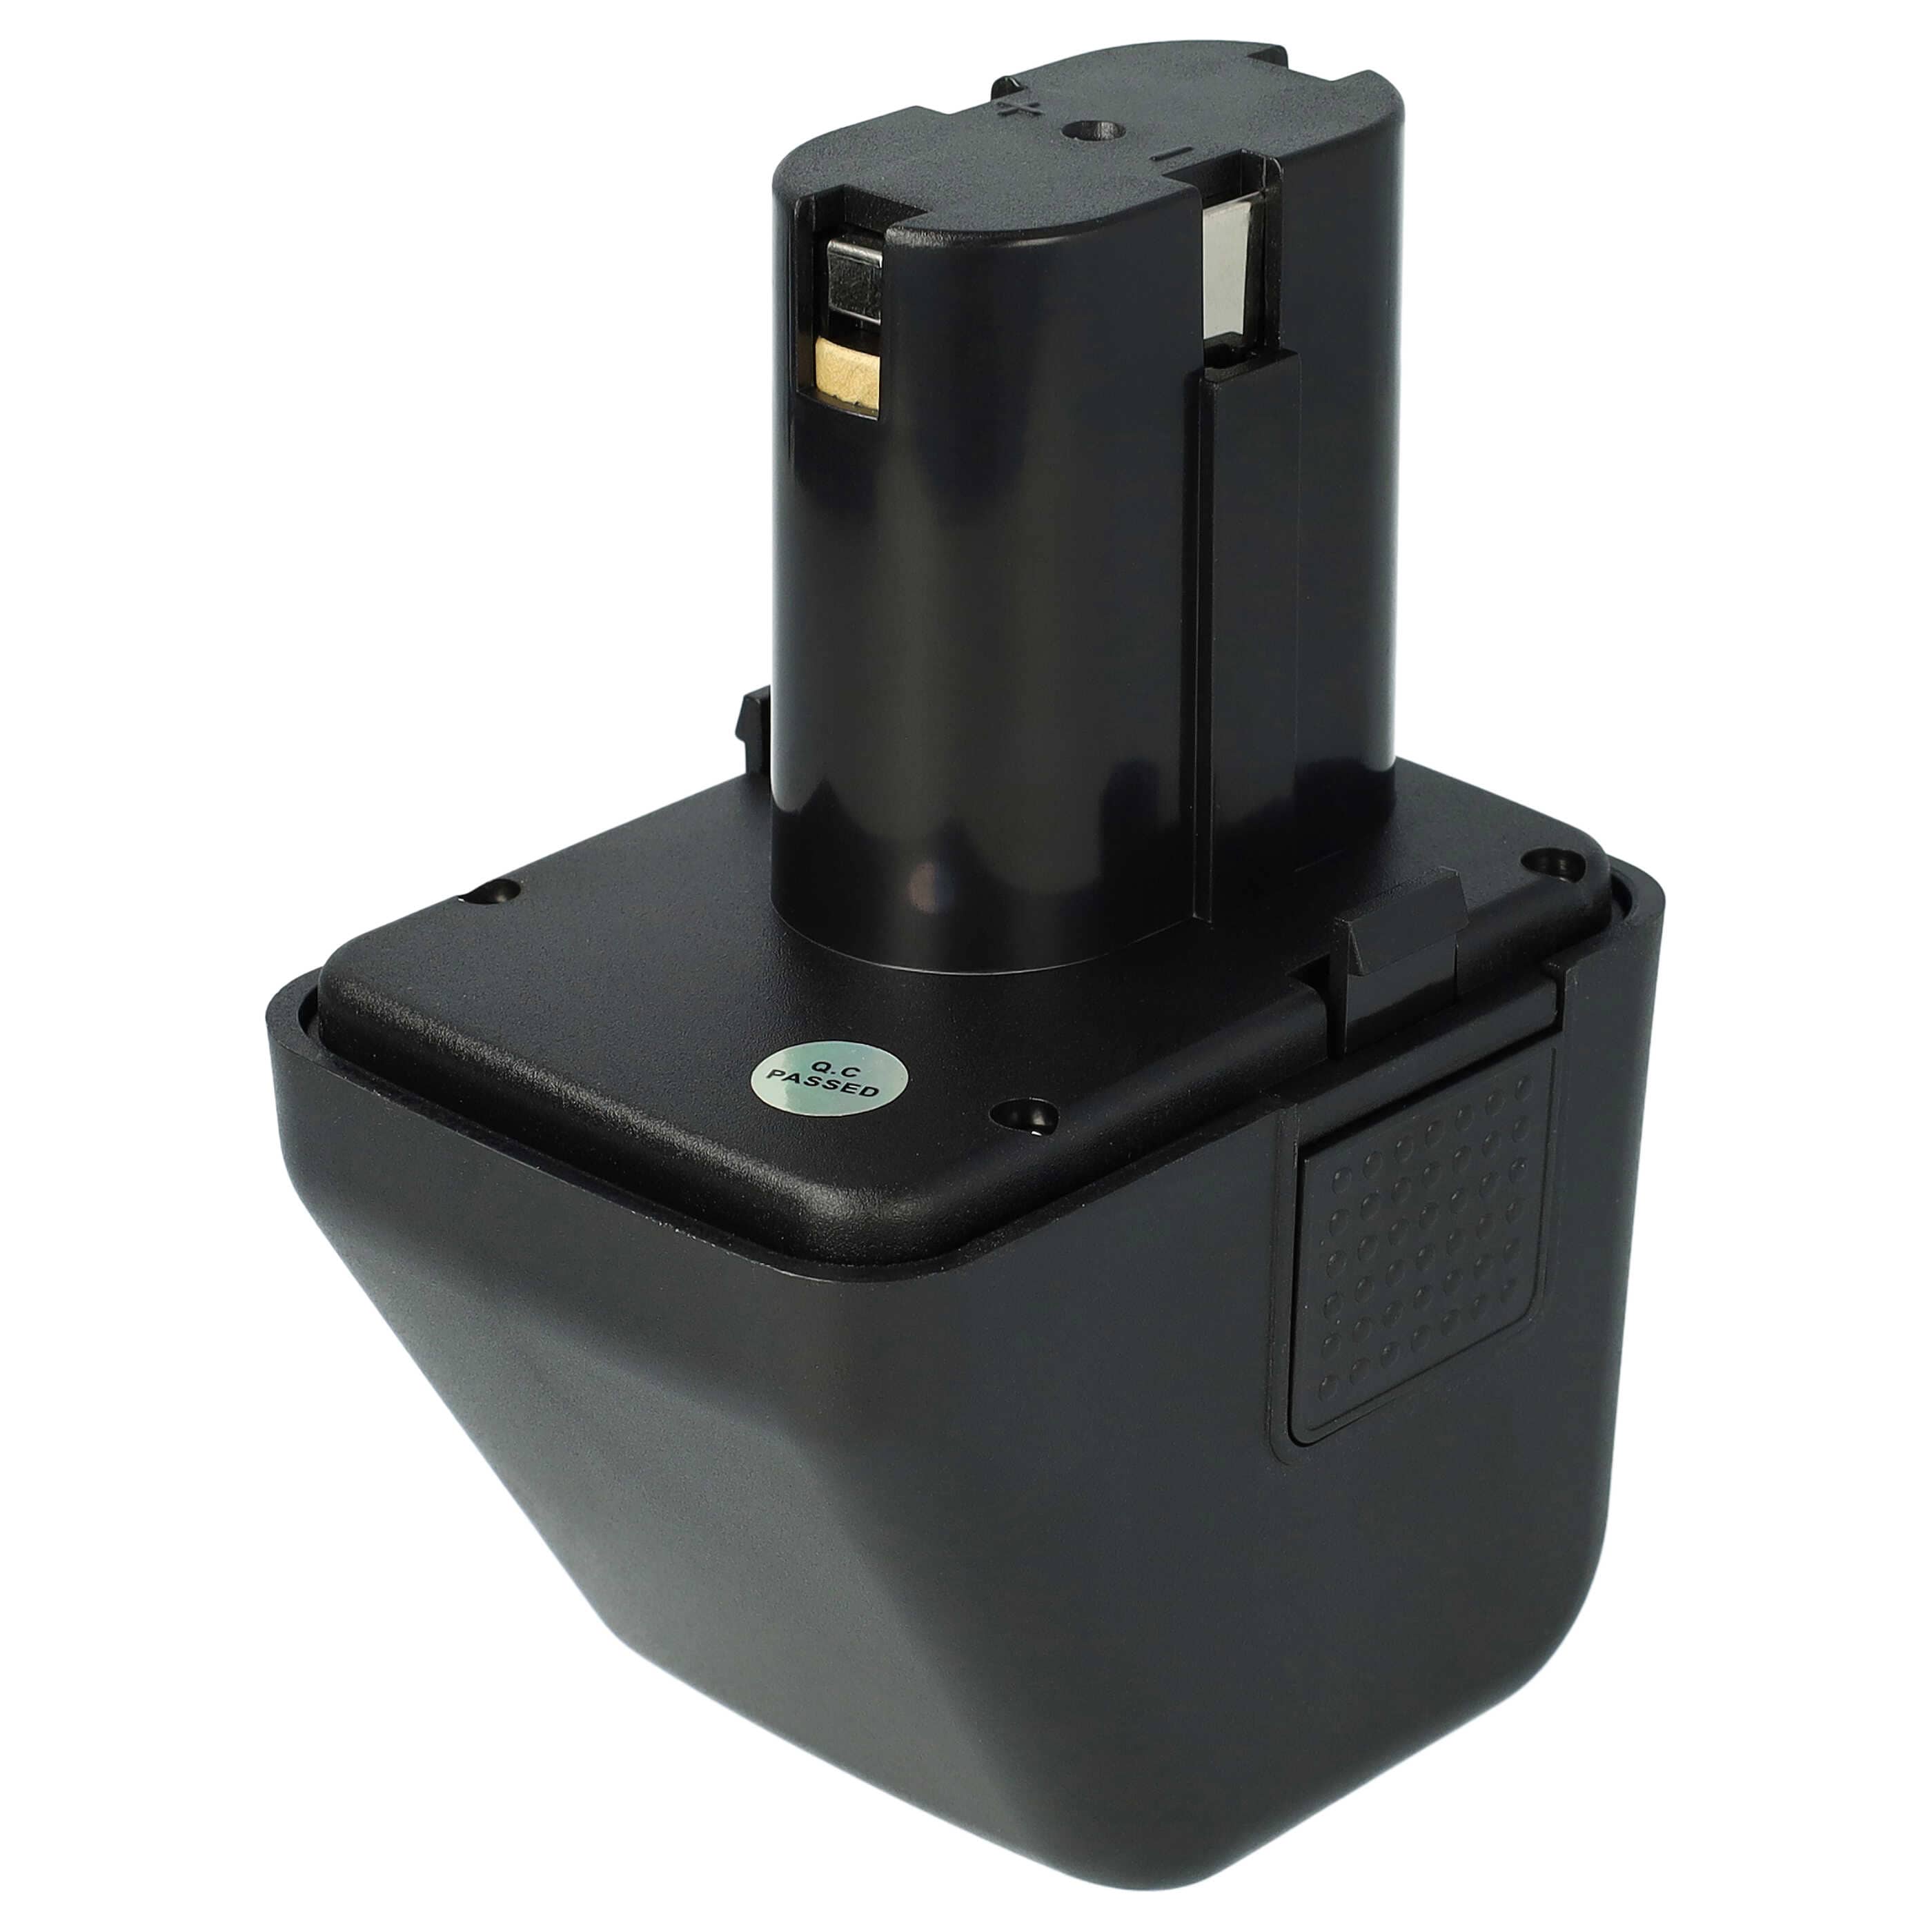 Akumulator do nitownicy zamiennik Gesipa CPT12/2 EHD - 4500 mAh, 12 V, NiMH